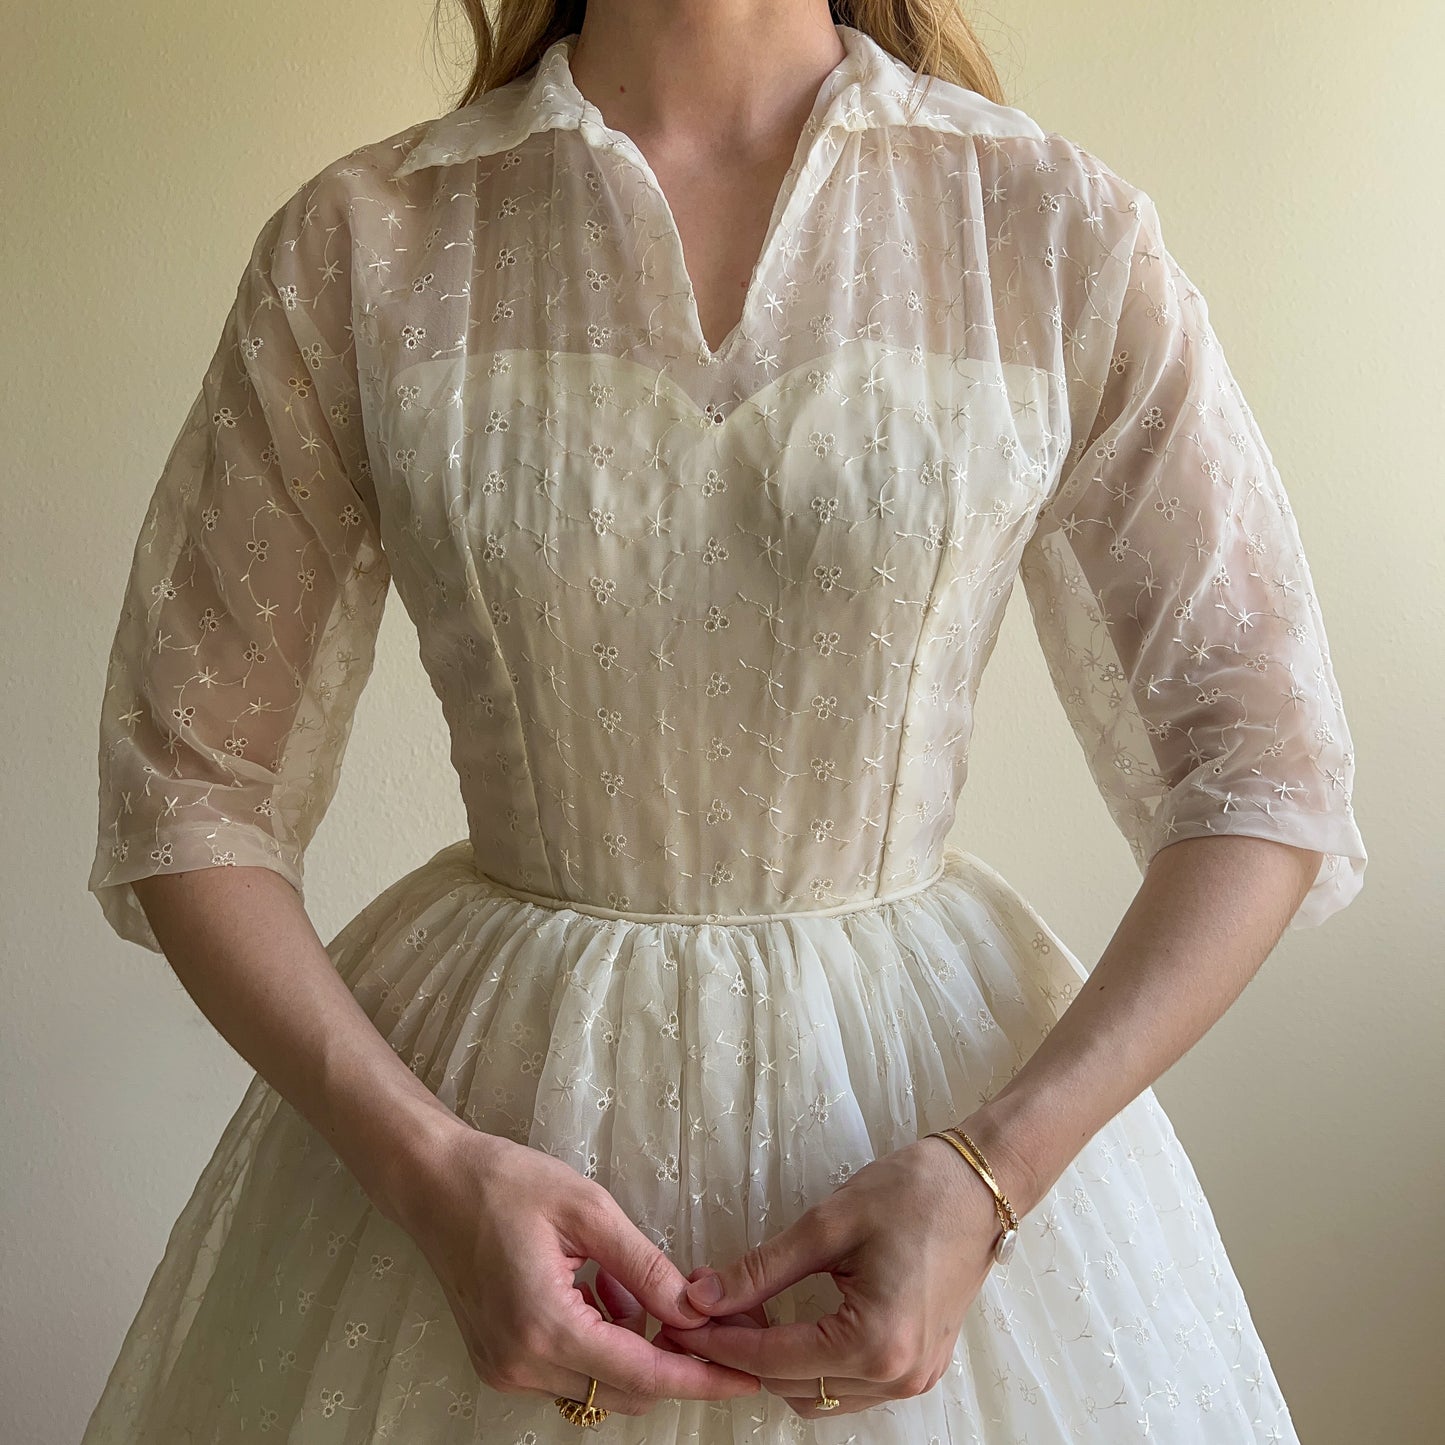 Stunning 1950s Scalloped Hem Wedding Dress With Embroidery (XS)